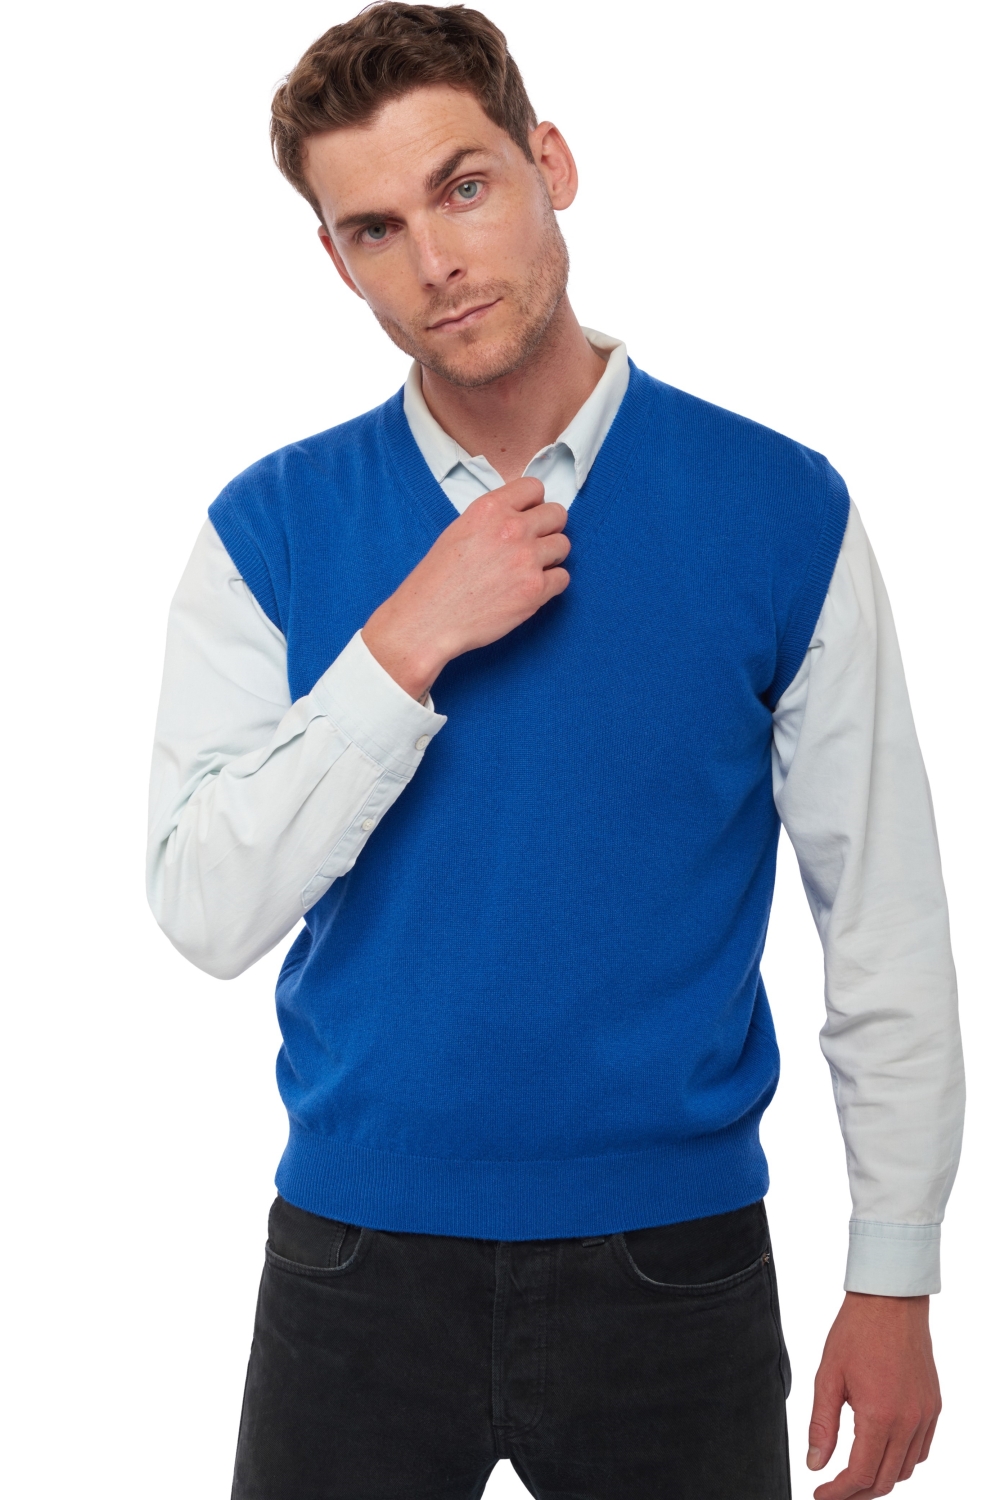 Cashmere men waistcoat sleeveless sweaters balthazar lapis blue 4xl